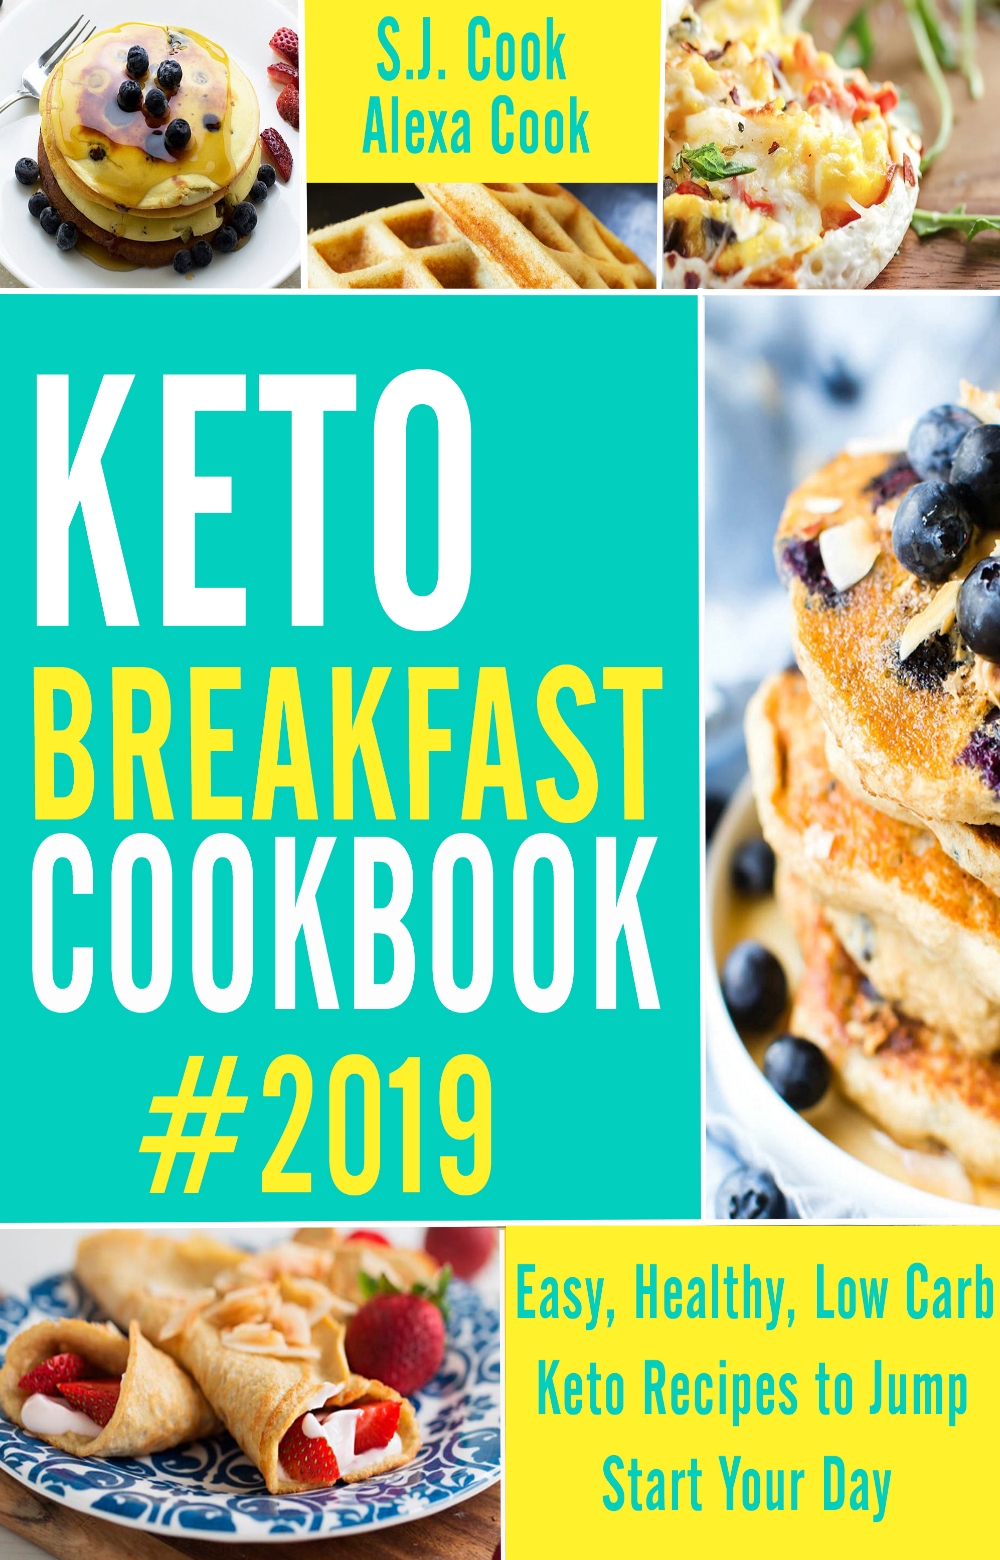 FREE: Keto Breakfast Cookbook by S.J. Cook